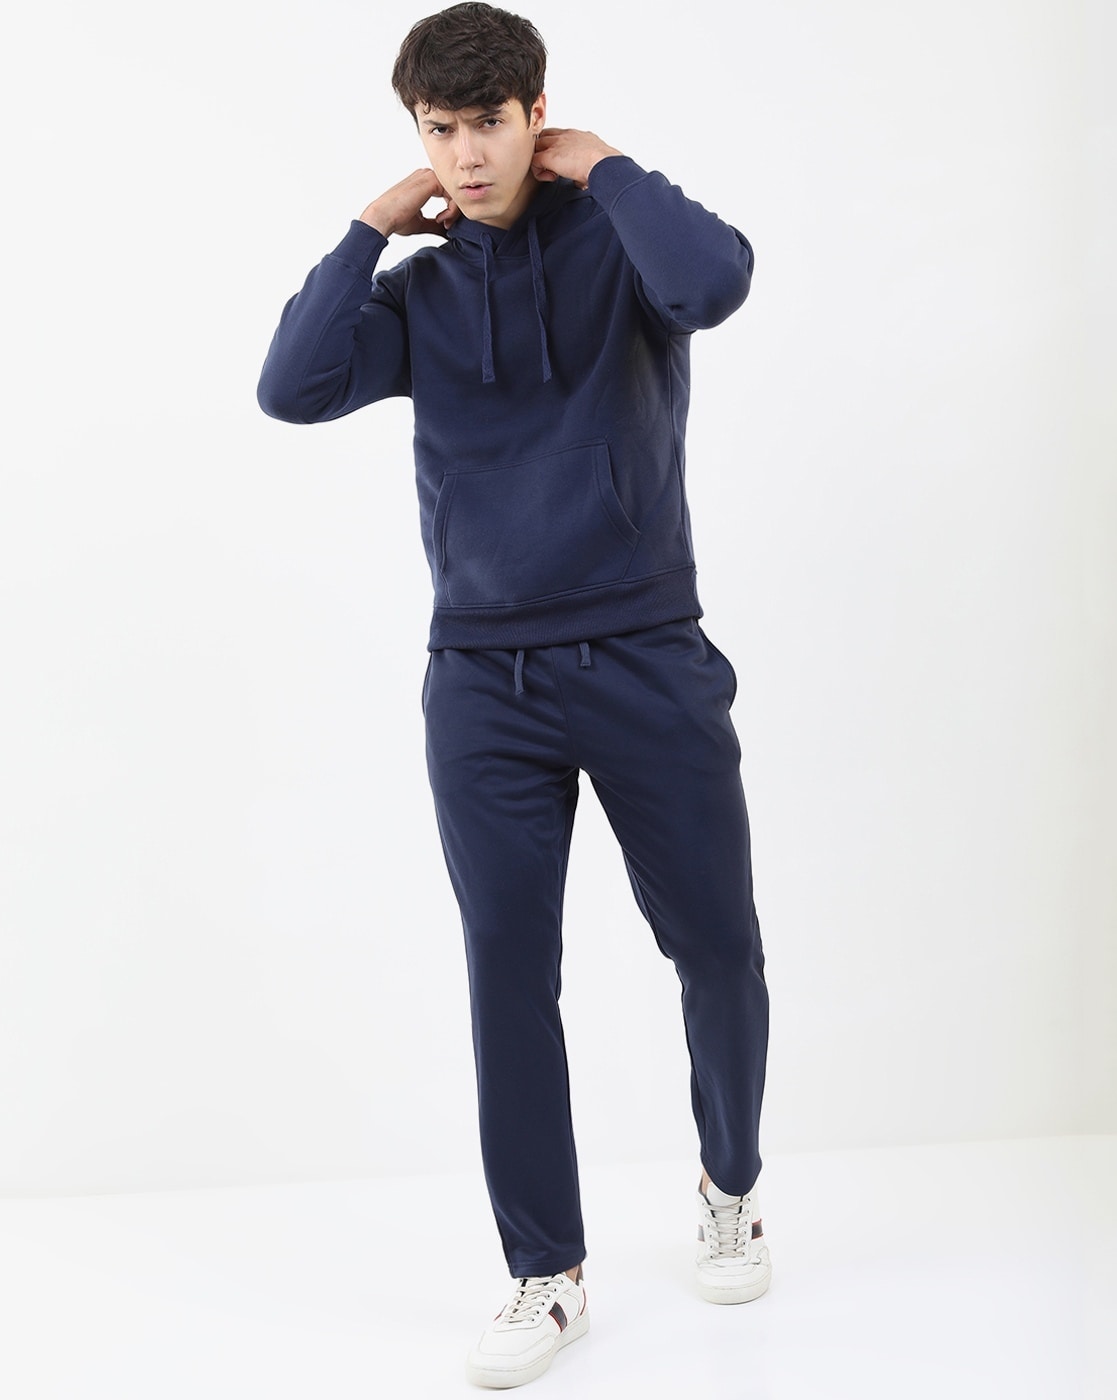 Buy Navy Blue Sweatshirt & Hoodies for Men by Ketch Online